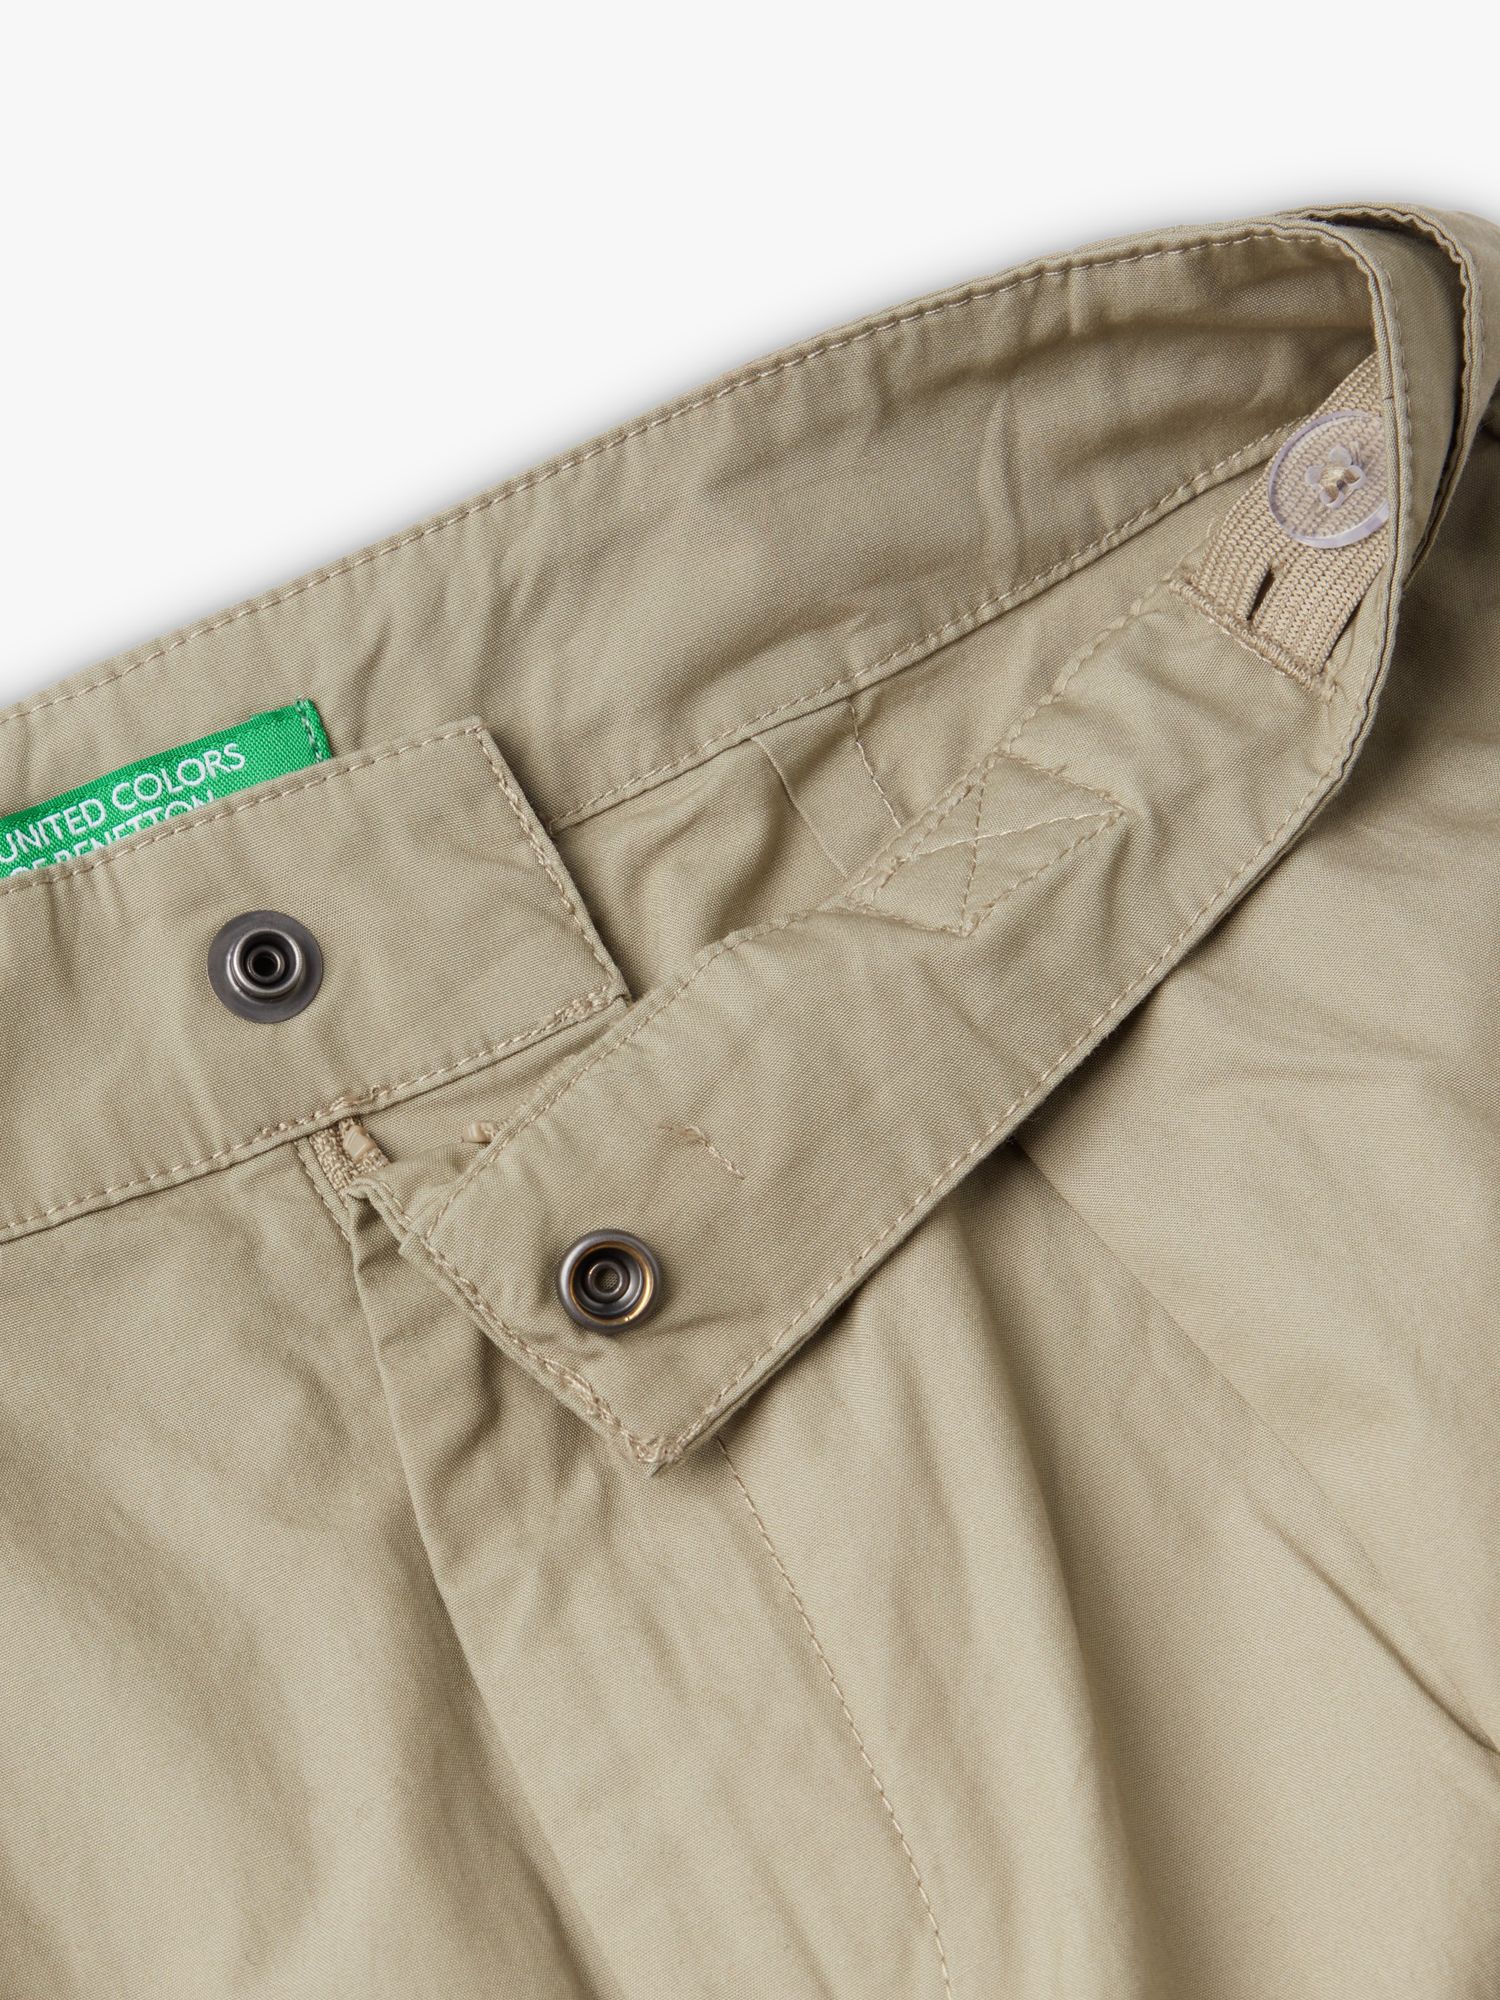 Benetton Kids' Front Detail Poplin Trousers, Military Green, 11-12 years